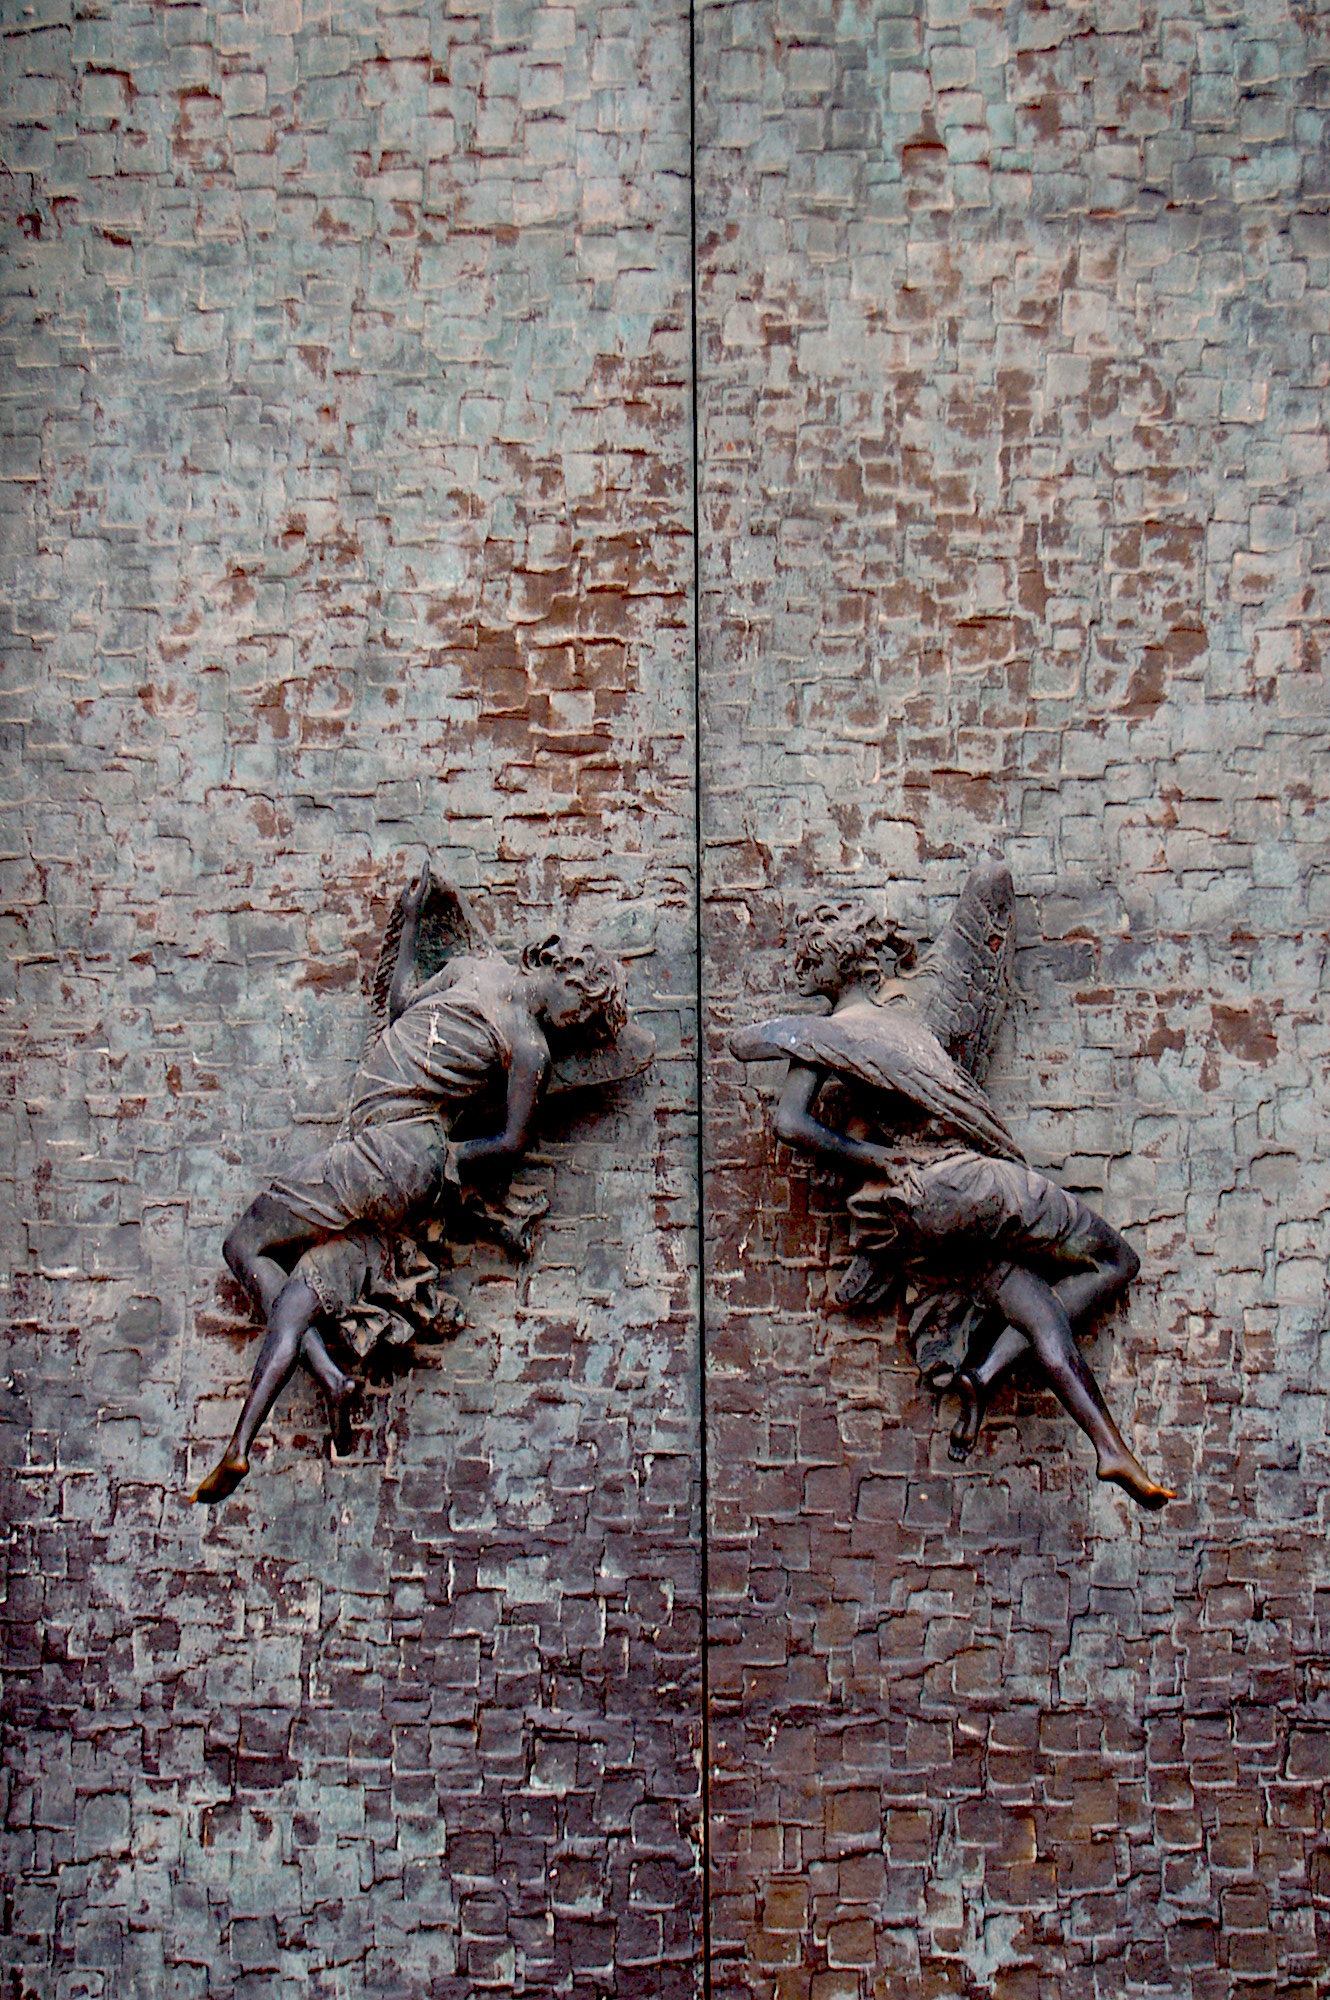 Bronze doors of the duomo in Orvieto Italy